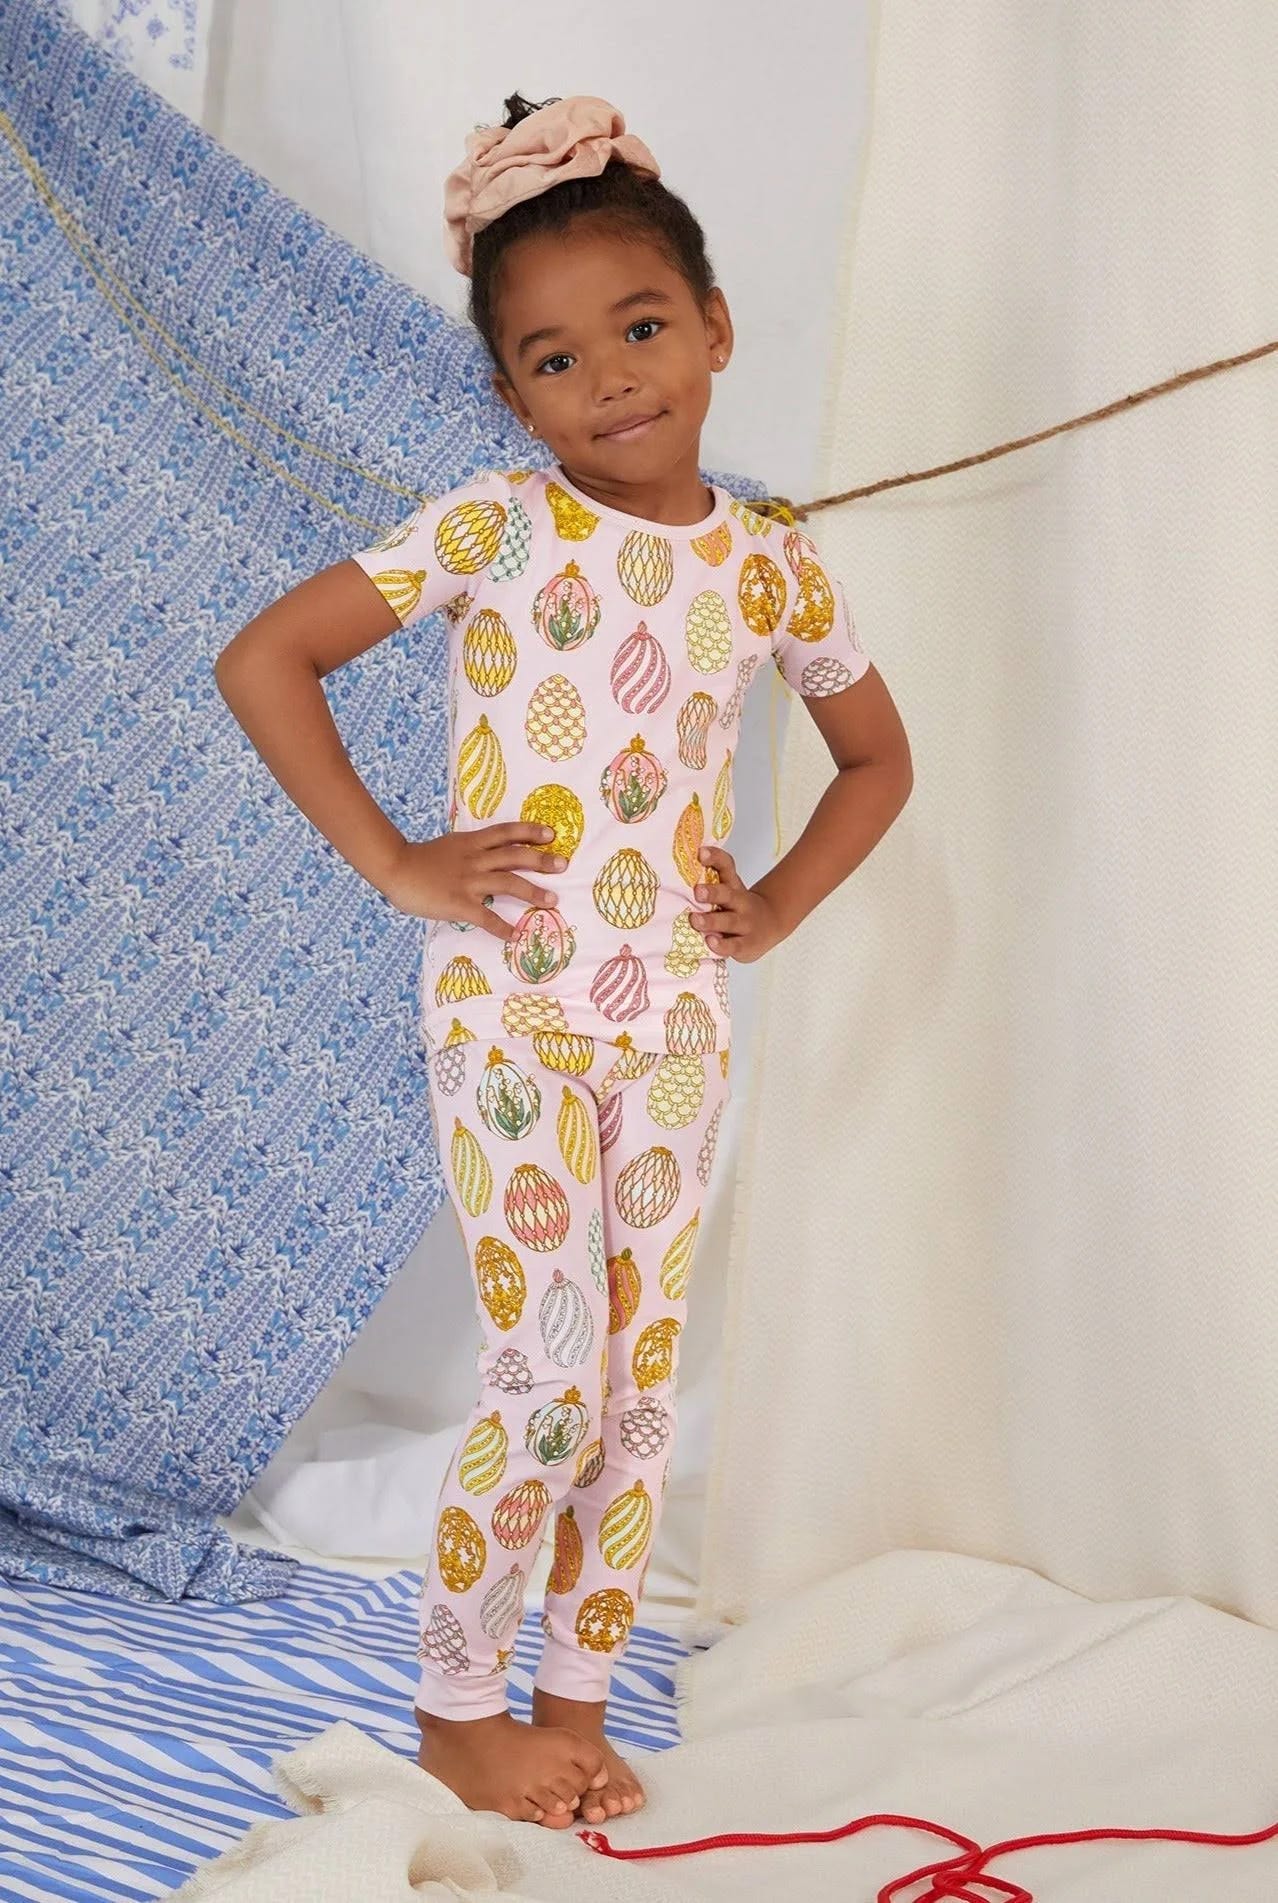 Egg Hunt Pajamas for Kids: Bedhead Stretch Jersey Short Sleeve Set | Image